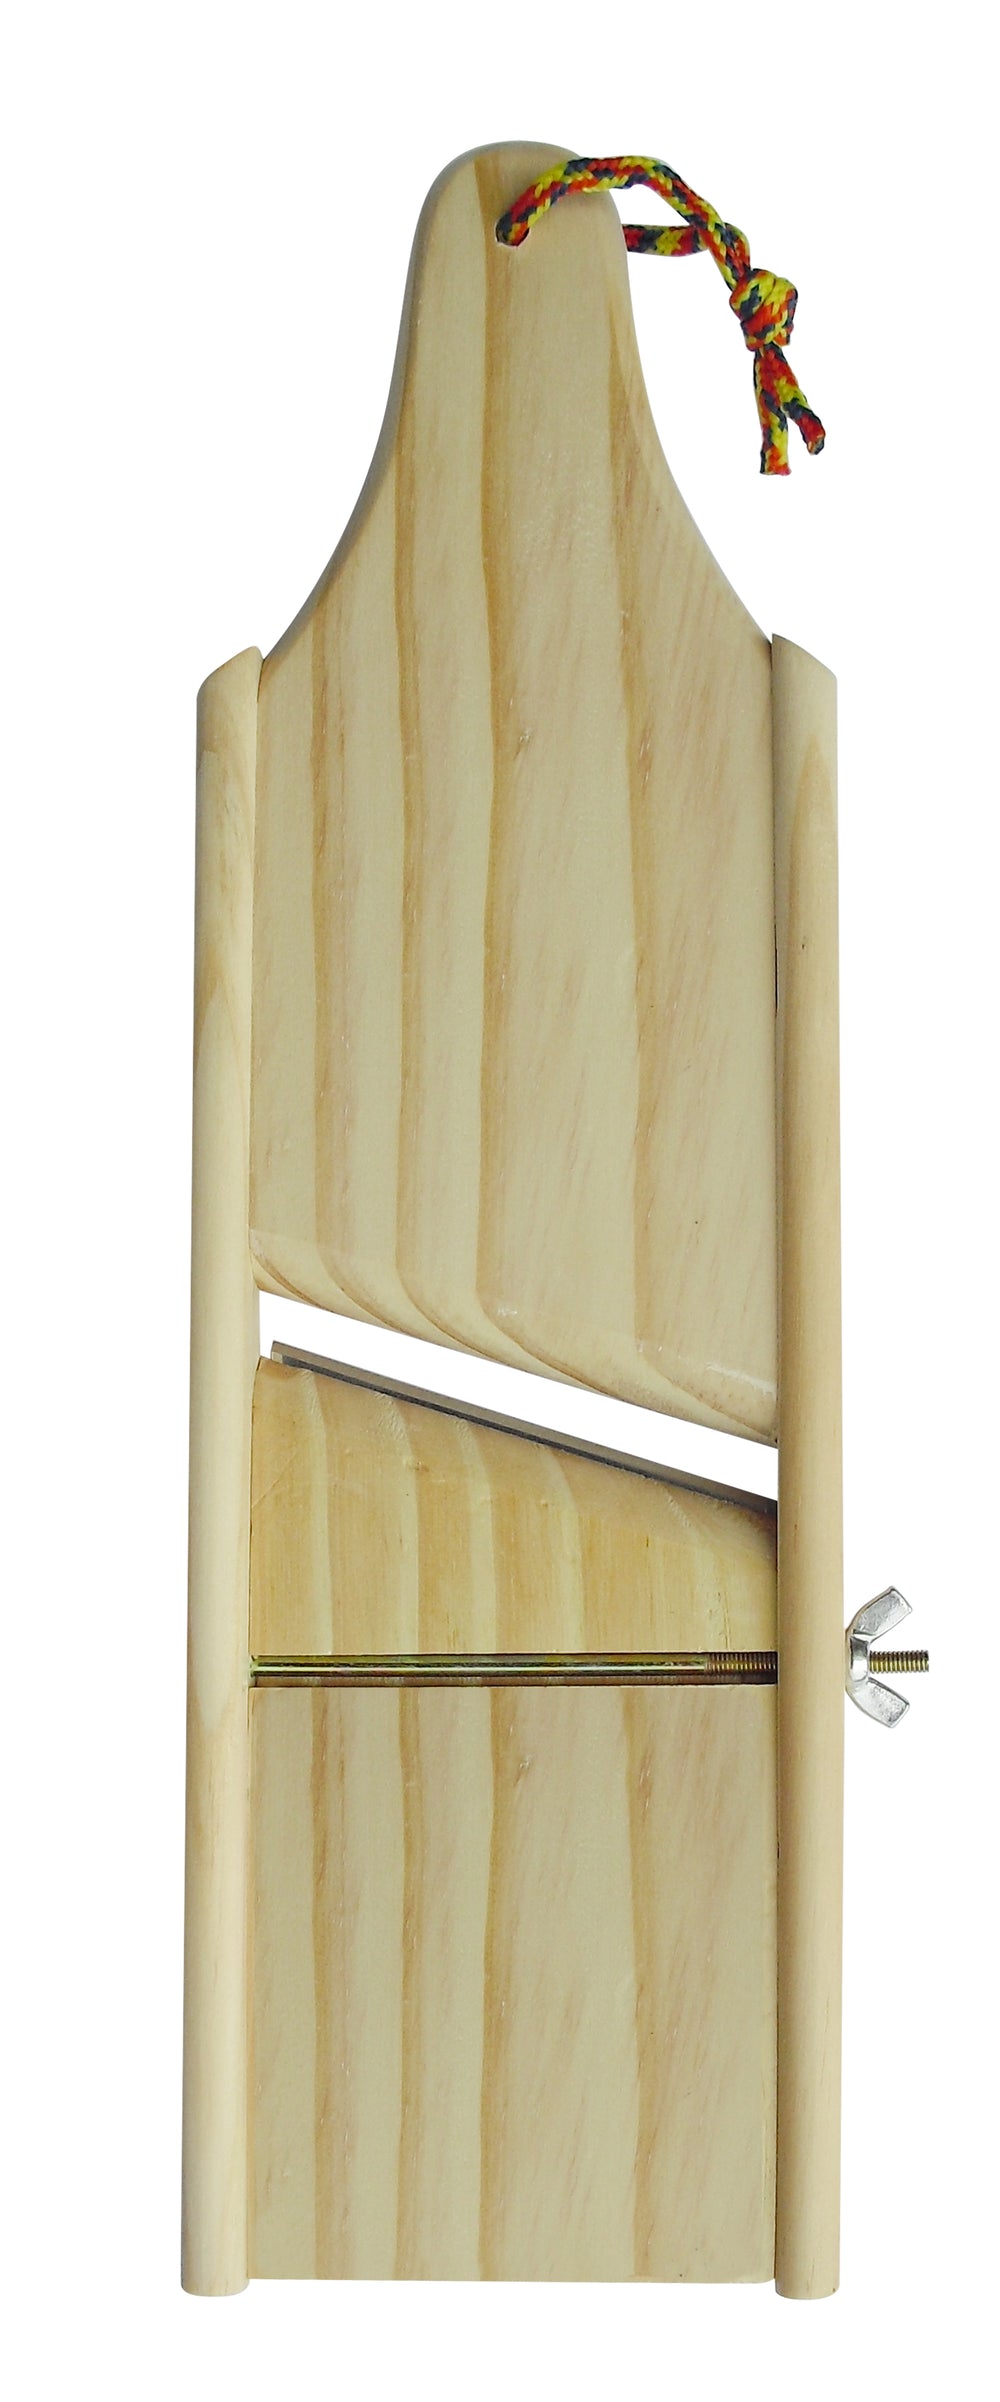 Bene Casa 14-inch wooden plantain slicer, adjustable blade, wooden mandolin